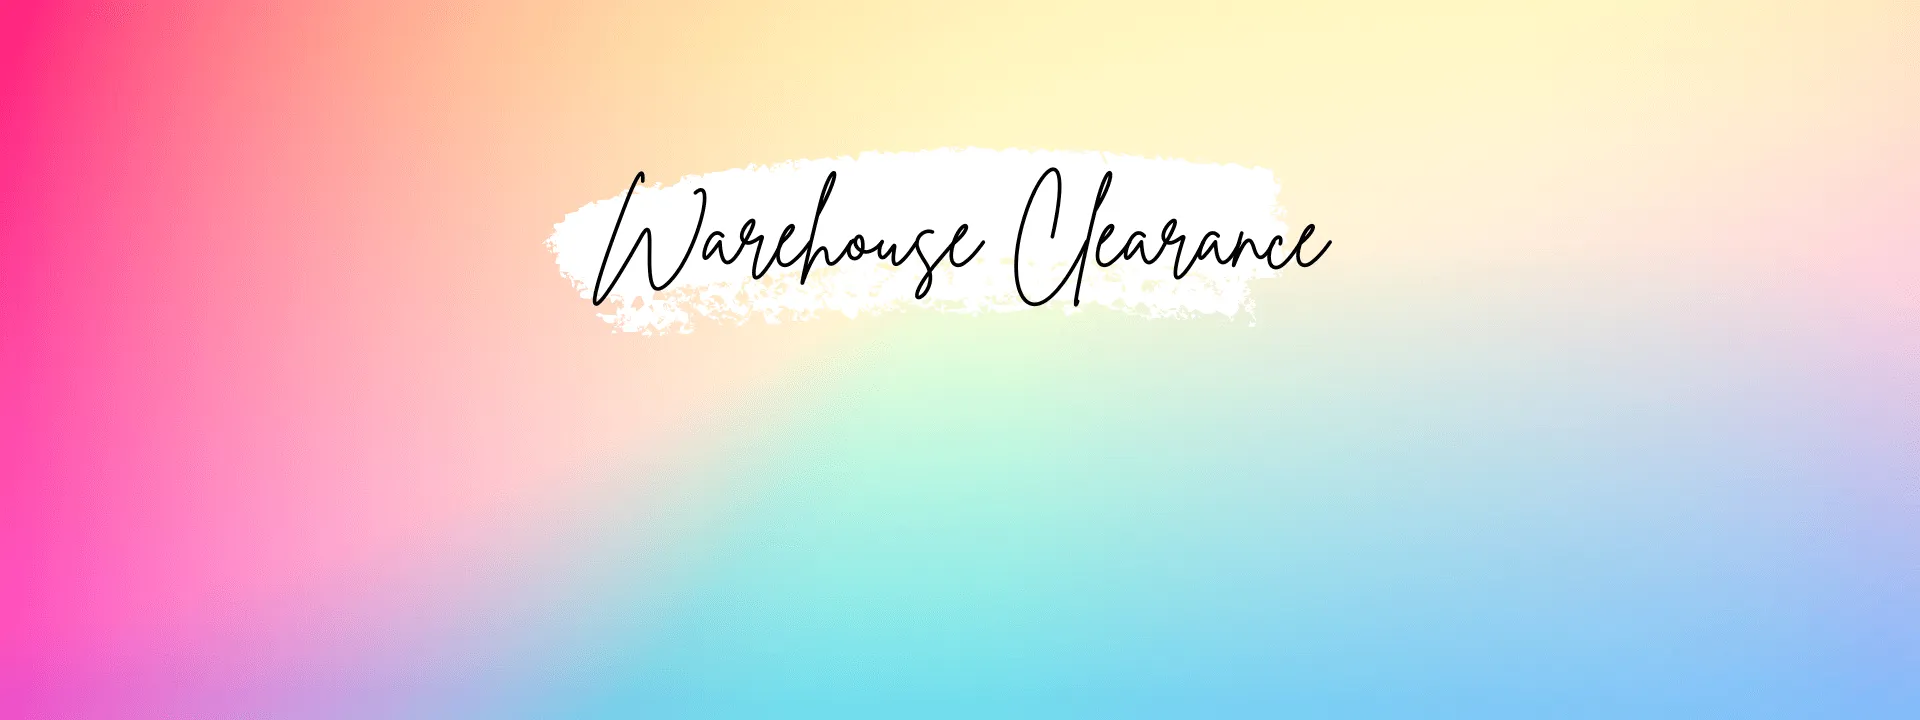 Warehouse clearance